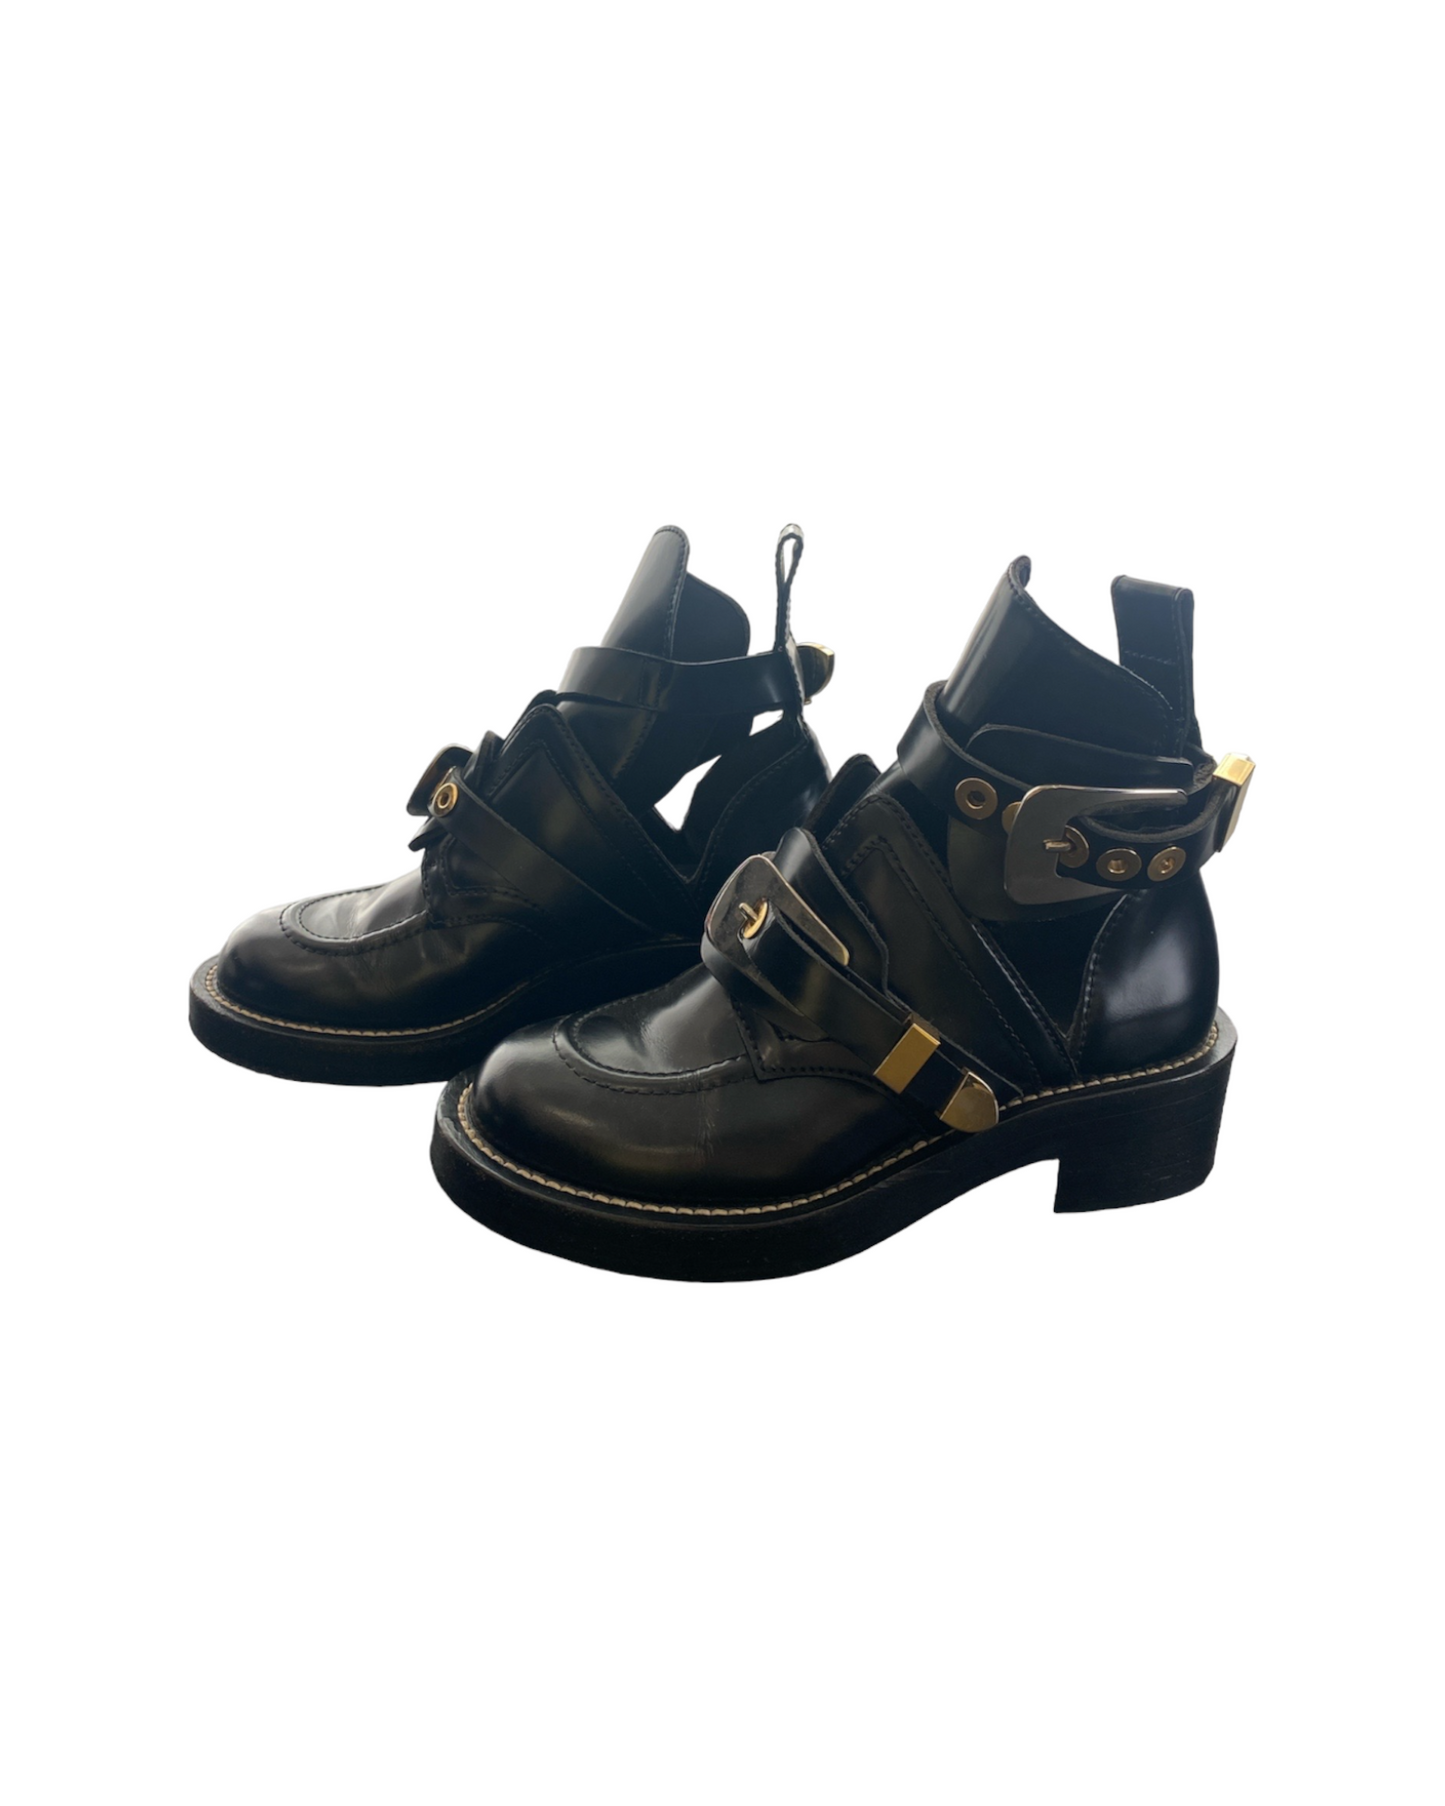 Balenciaga Leather Buckled Boots